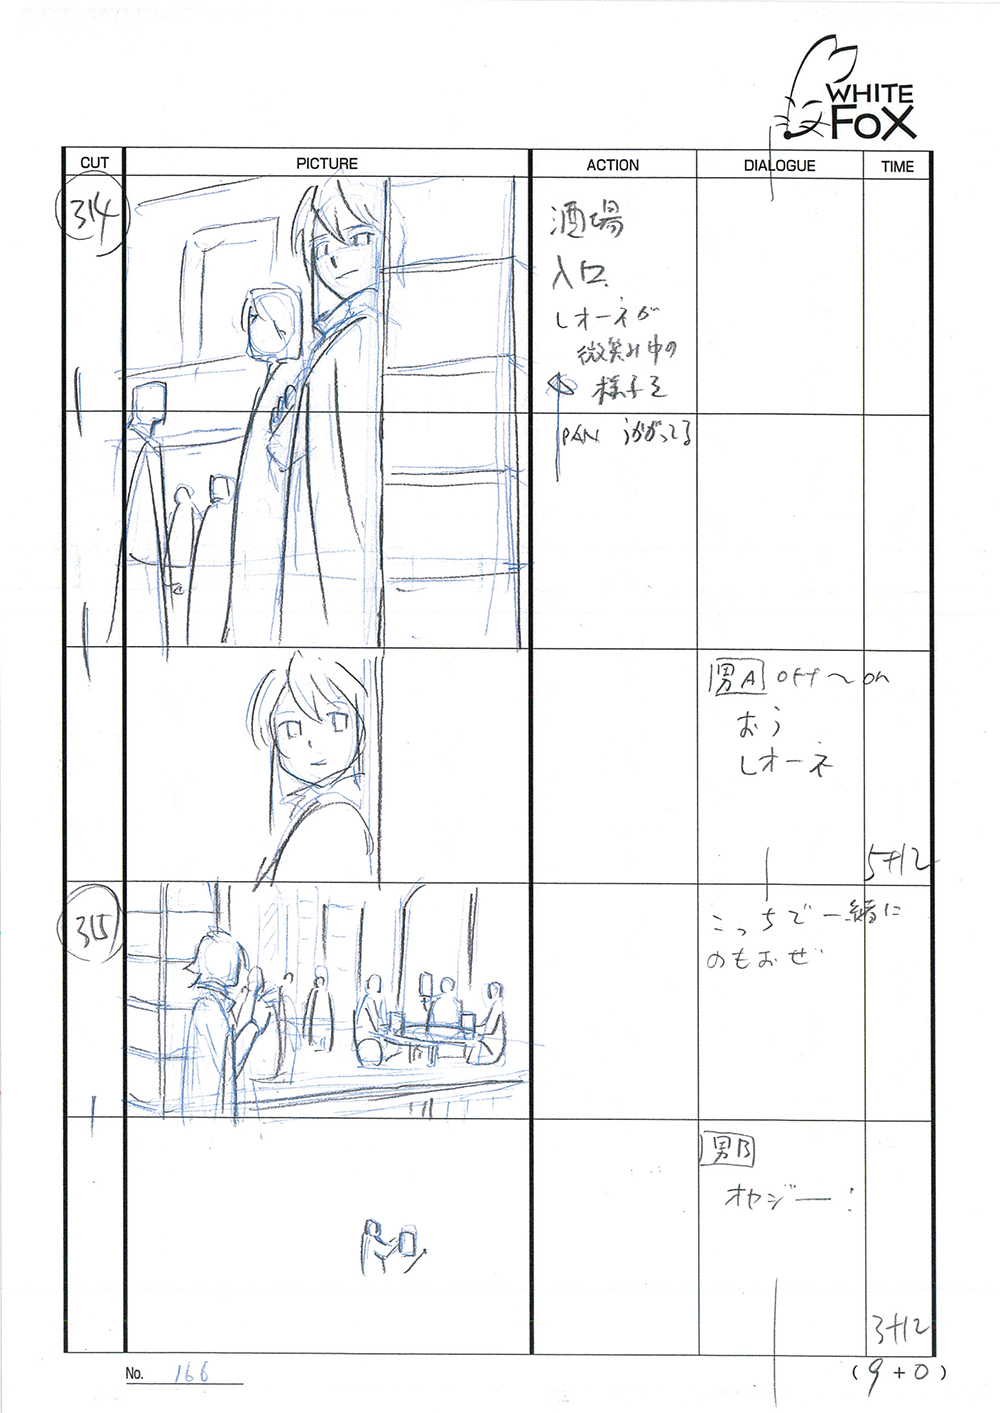 Akame ga Kill Episode 24 Storyboard Leak 171